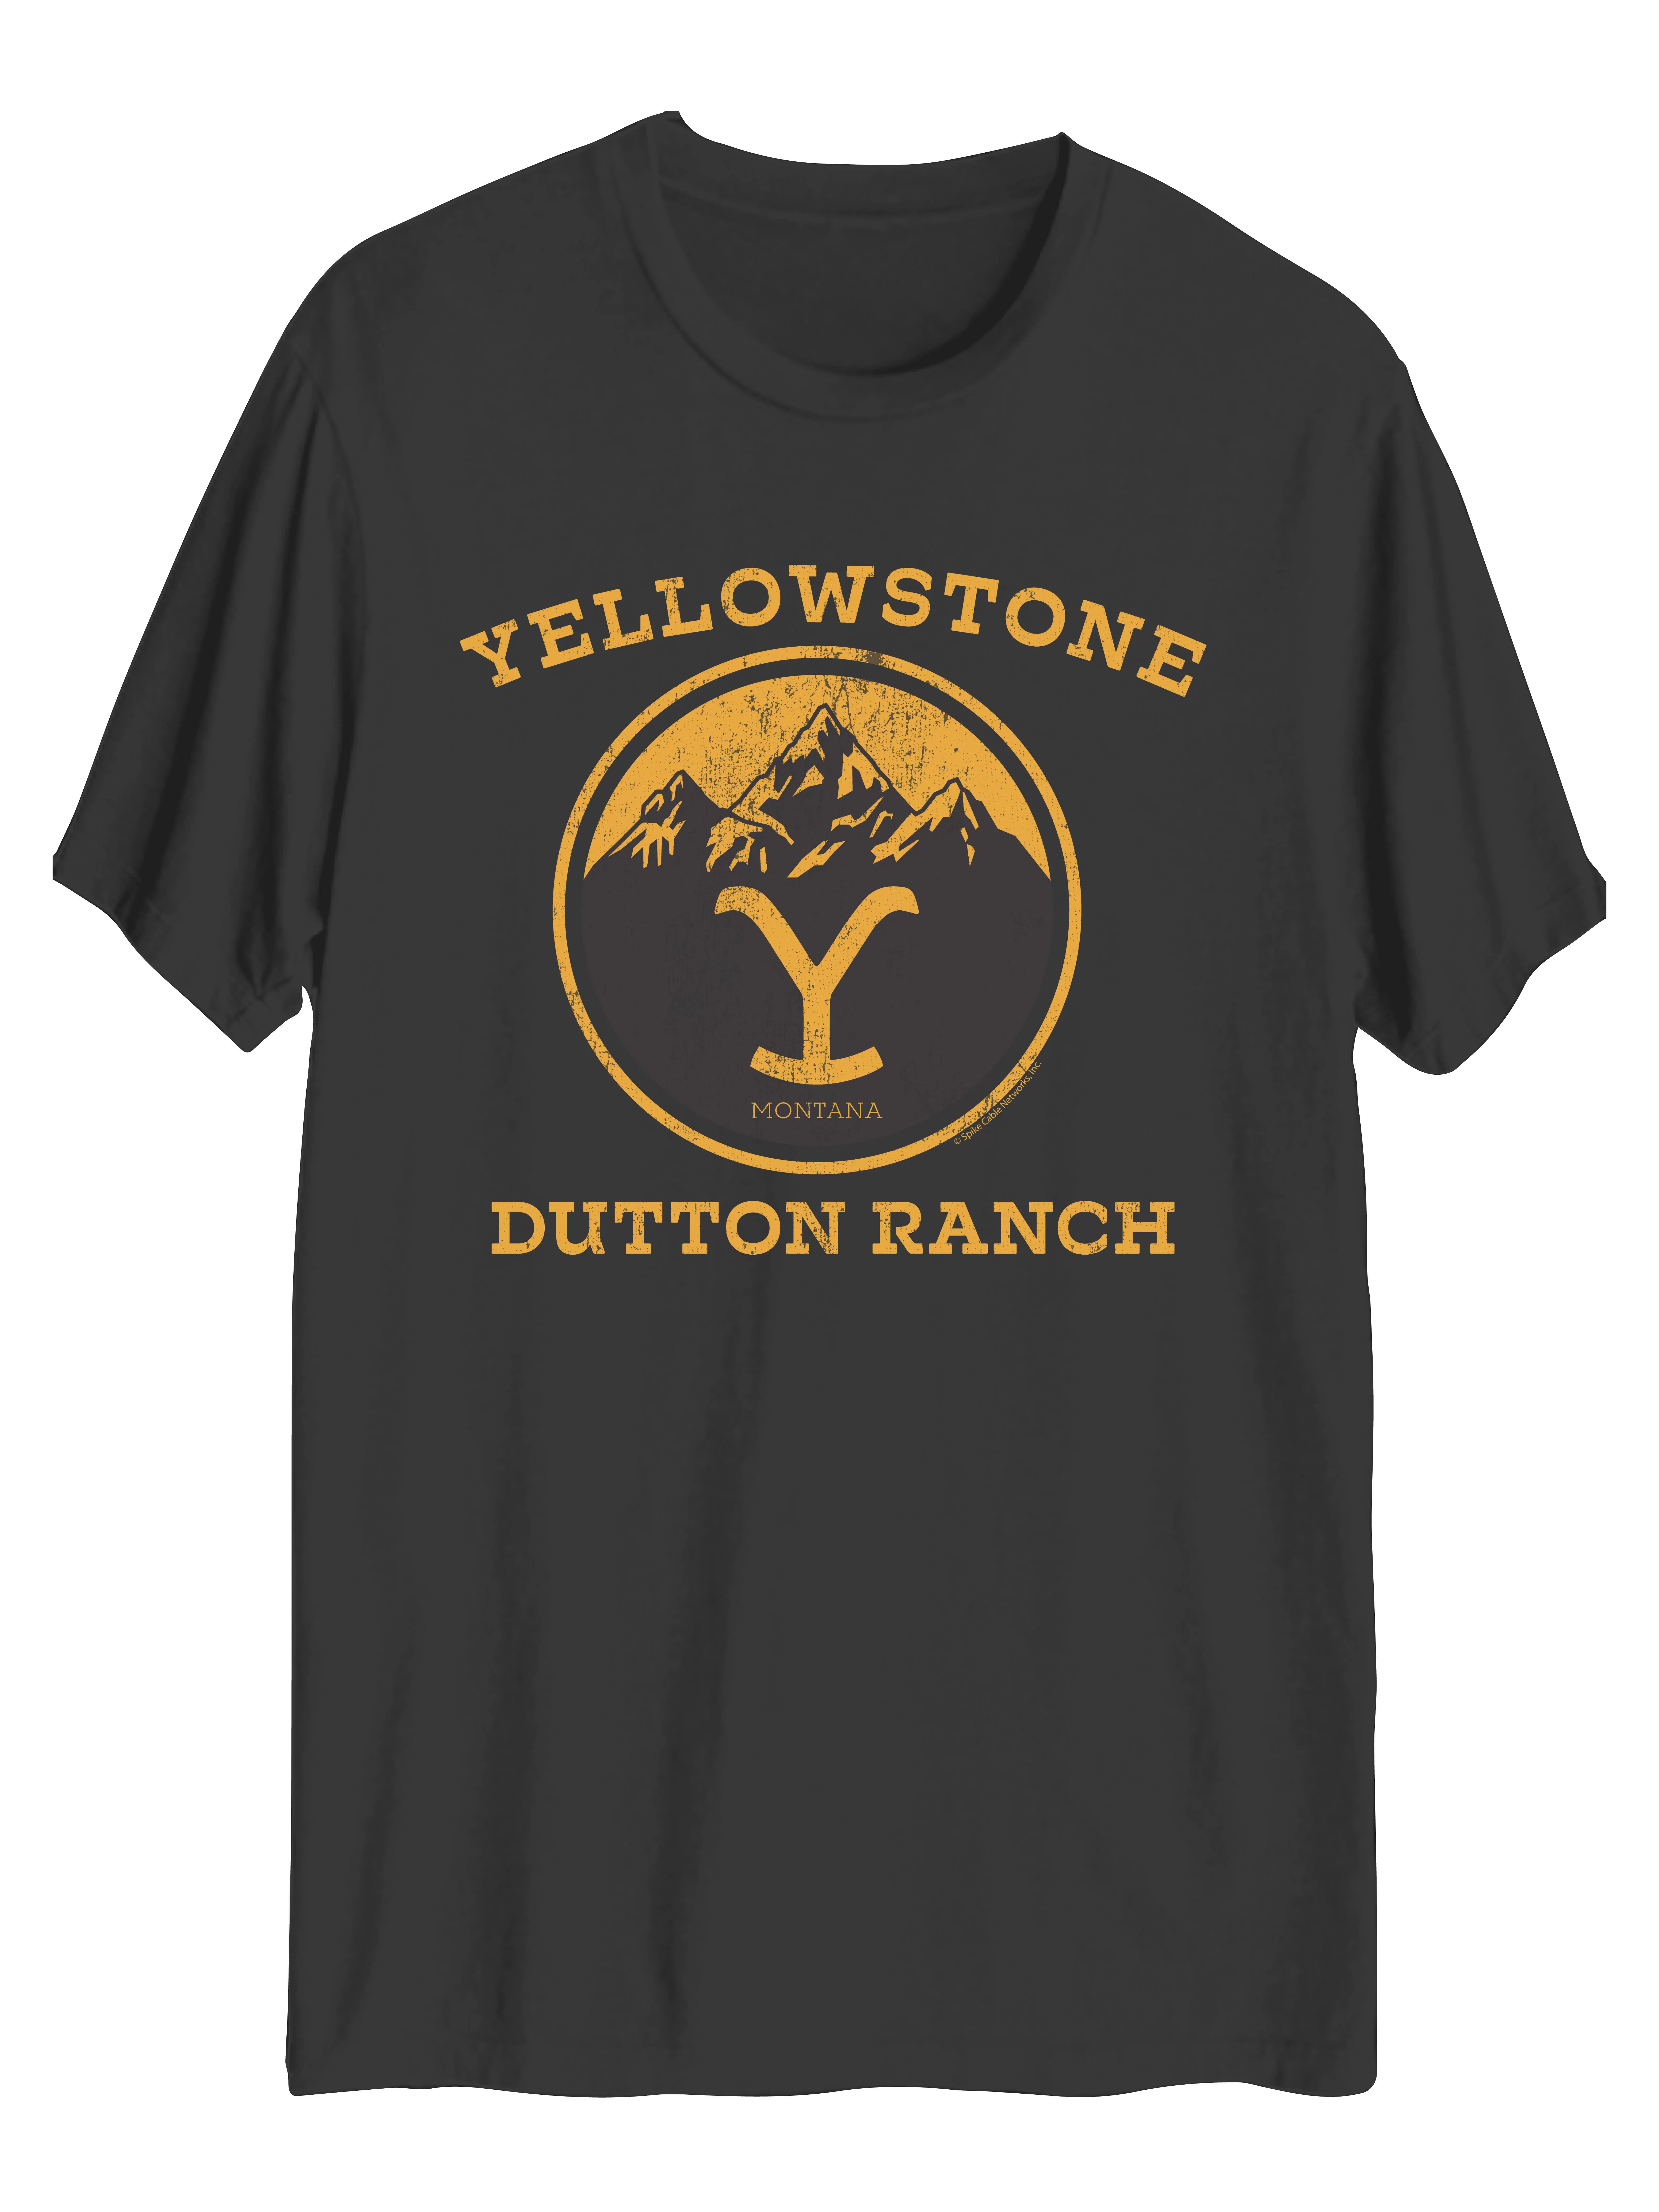 Yellowstone Dutton Ranch 1886 Men's and Big Men's Graphic T-shirt | Walmart (US)